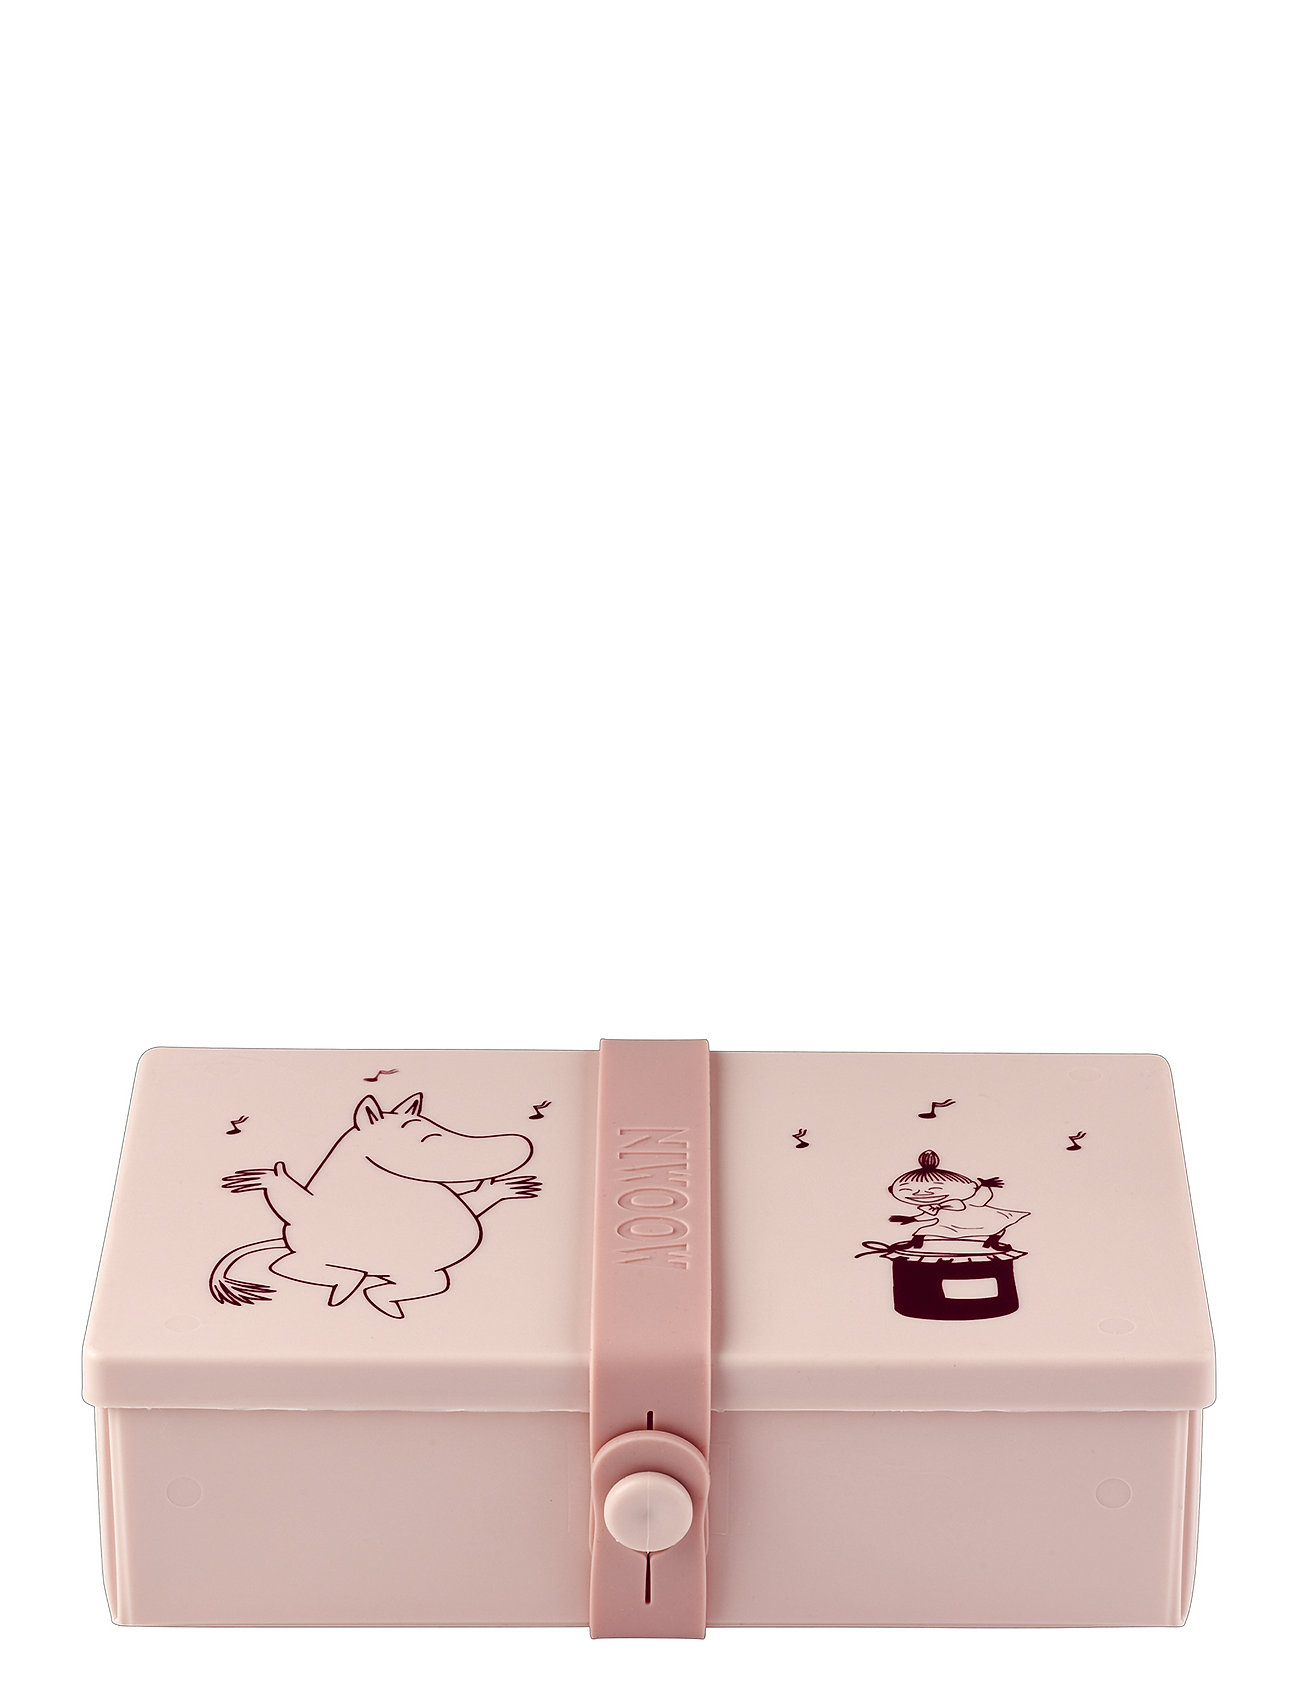 The Moomins Storage/Lunch Box Rectangular Home Kitchen Kitchen Storage Lunch Boxes Pink Moomin